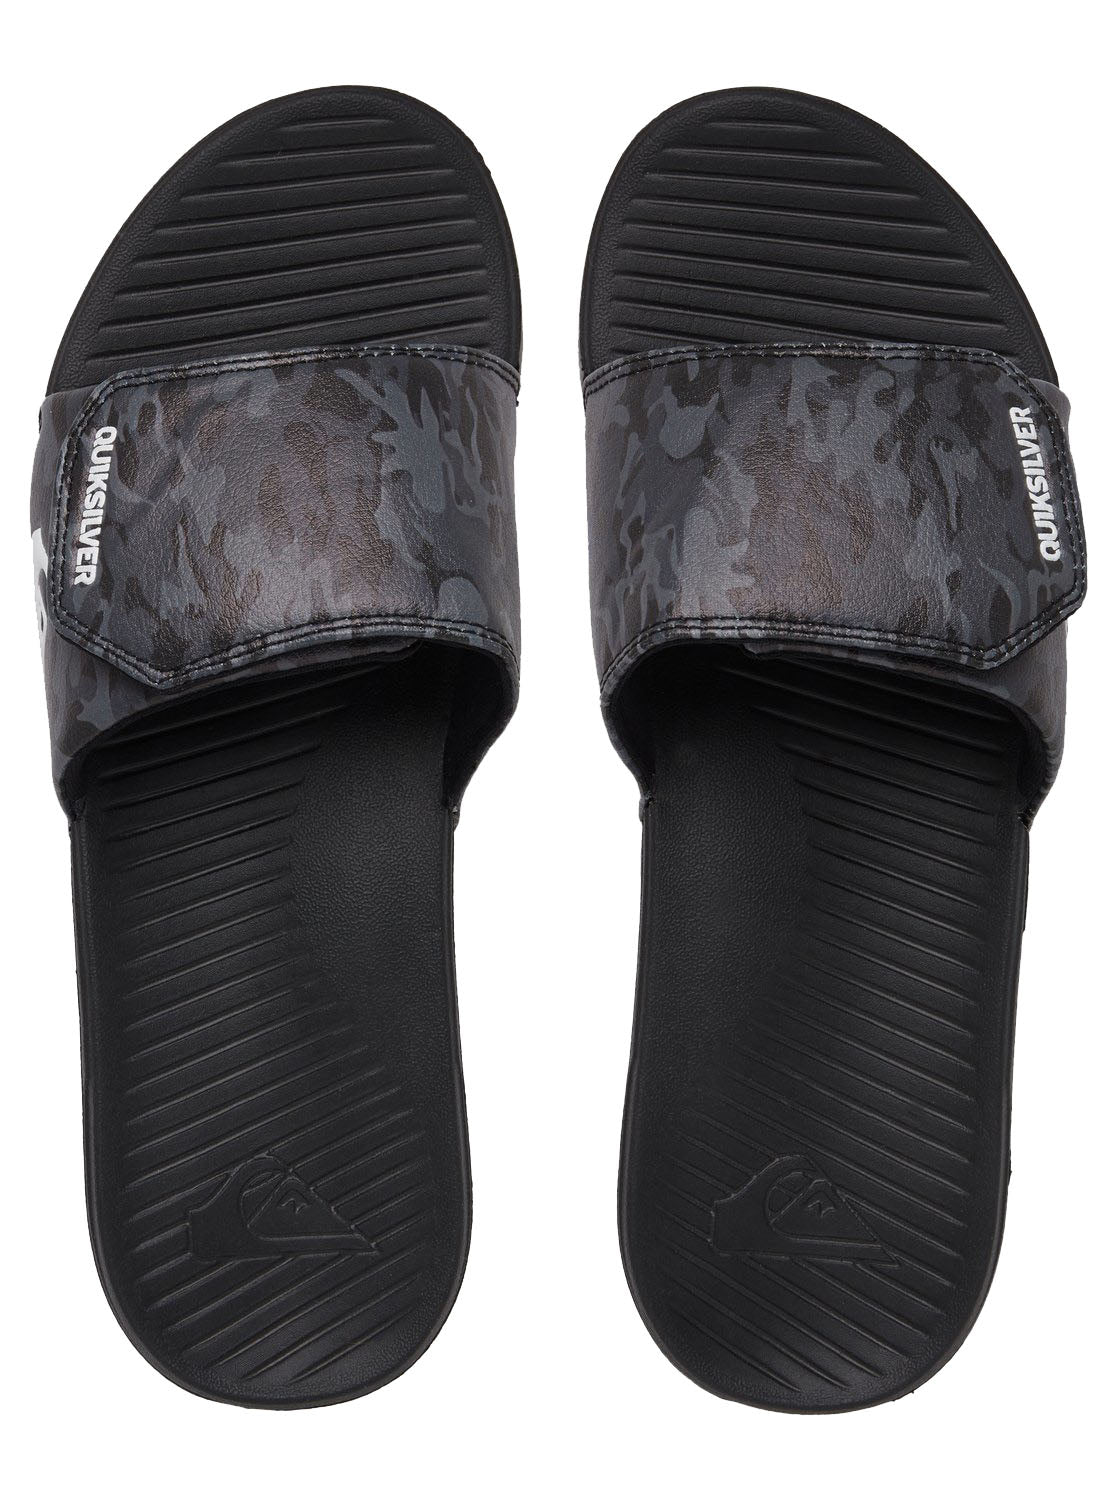 Quiksilver Bright Coast Adjust Mens Sandal XSKK-Grey-Black-Black 11